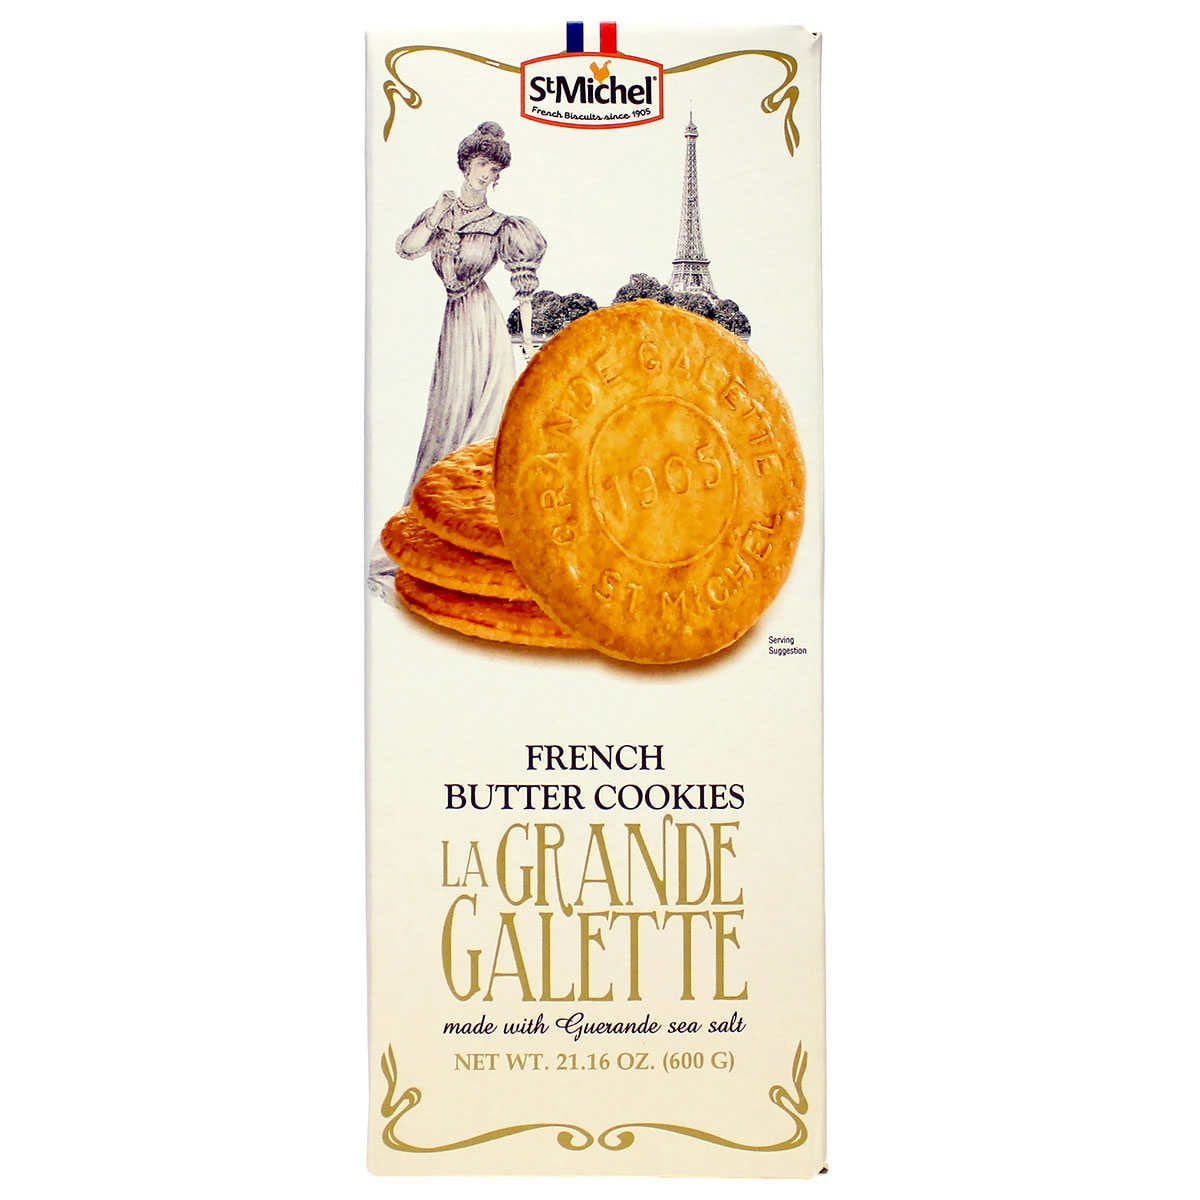 ST MICHEL Biscuits La Grande galette with Guerande salt and fresh